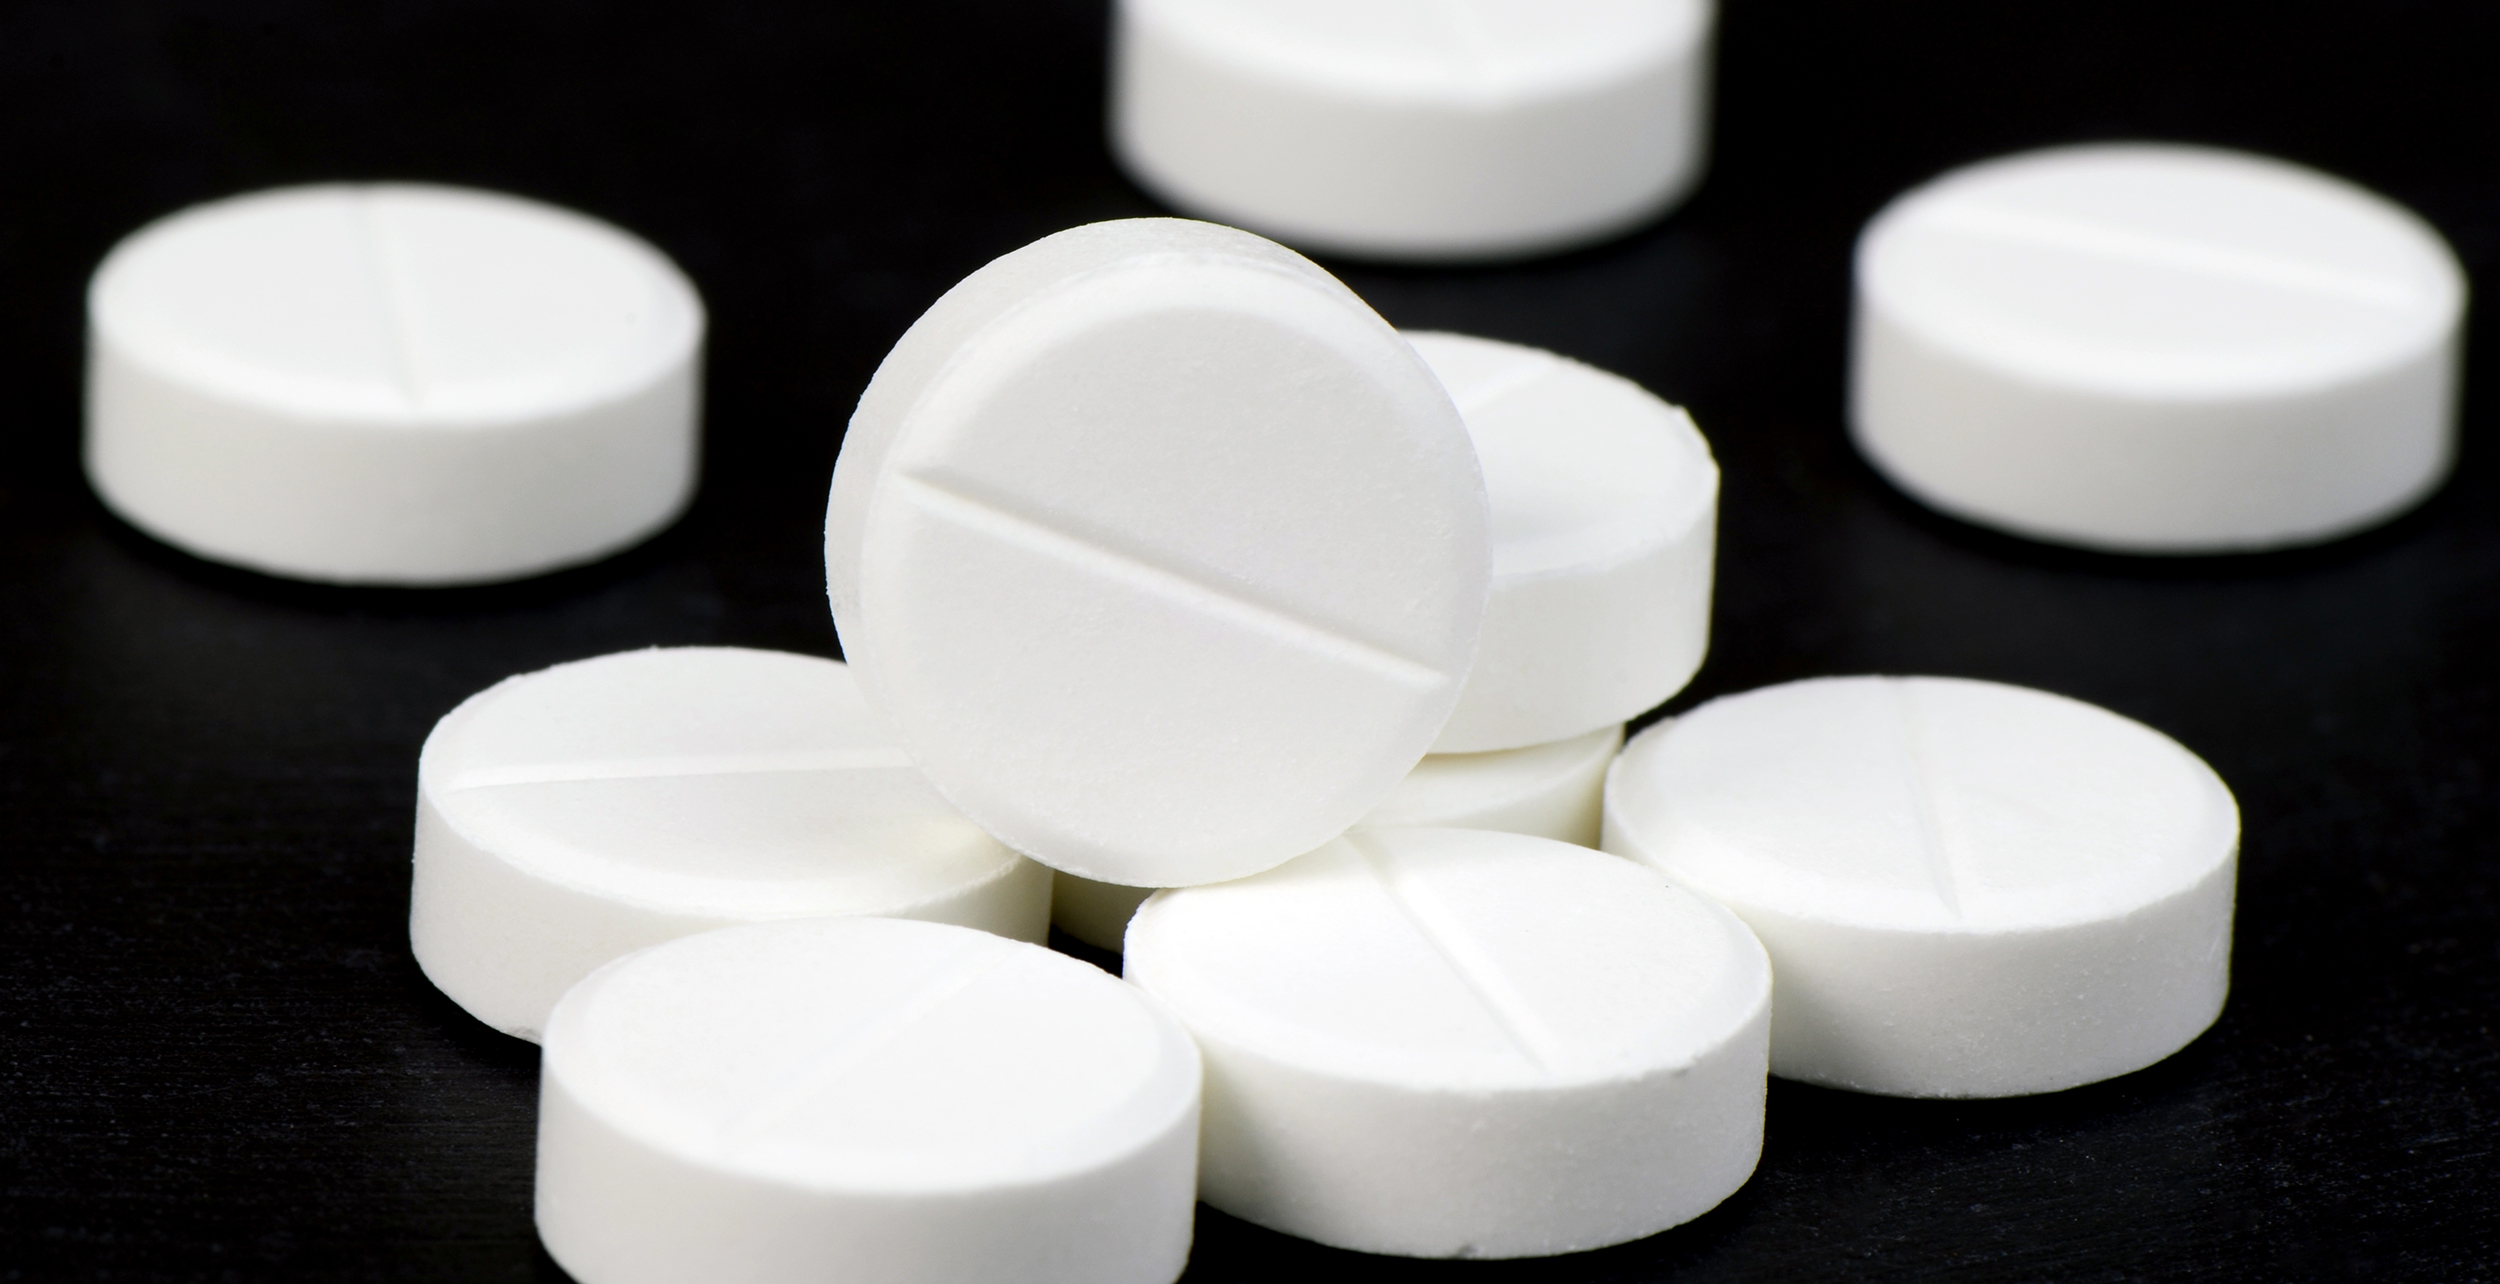 opioid pills piled up